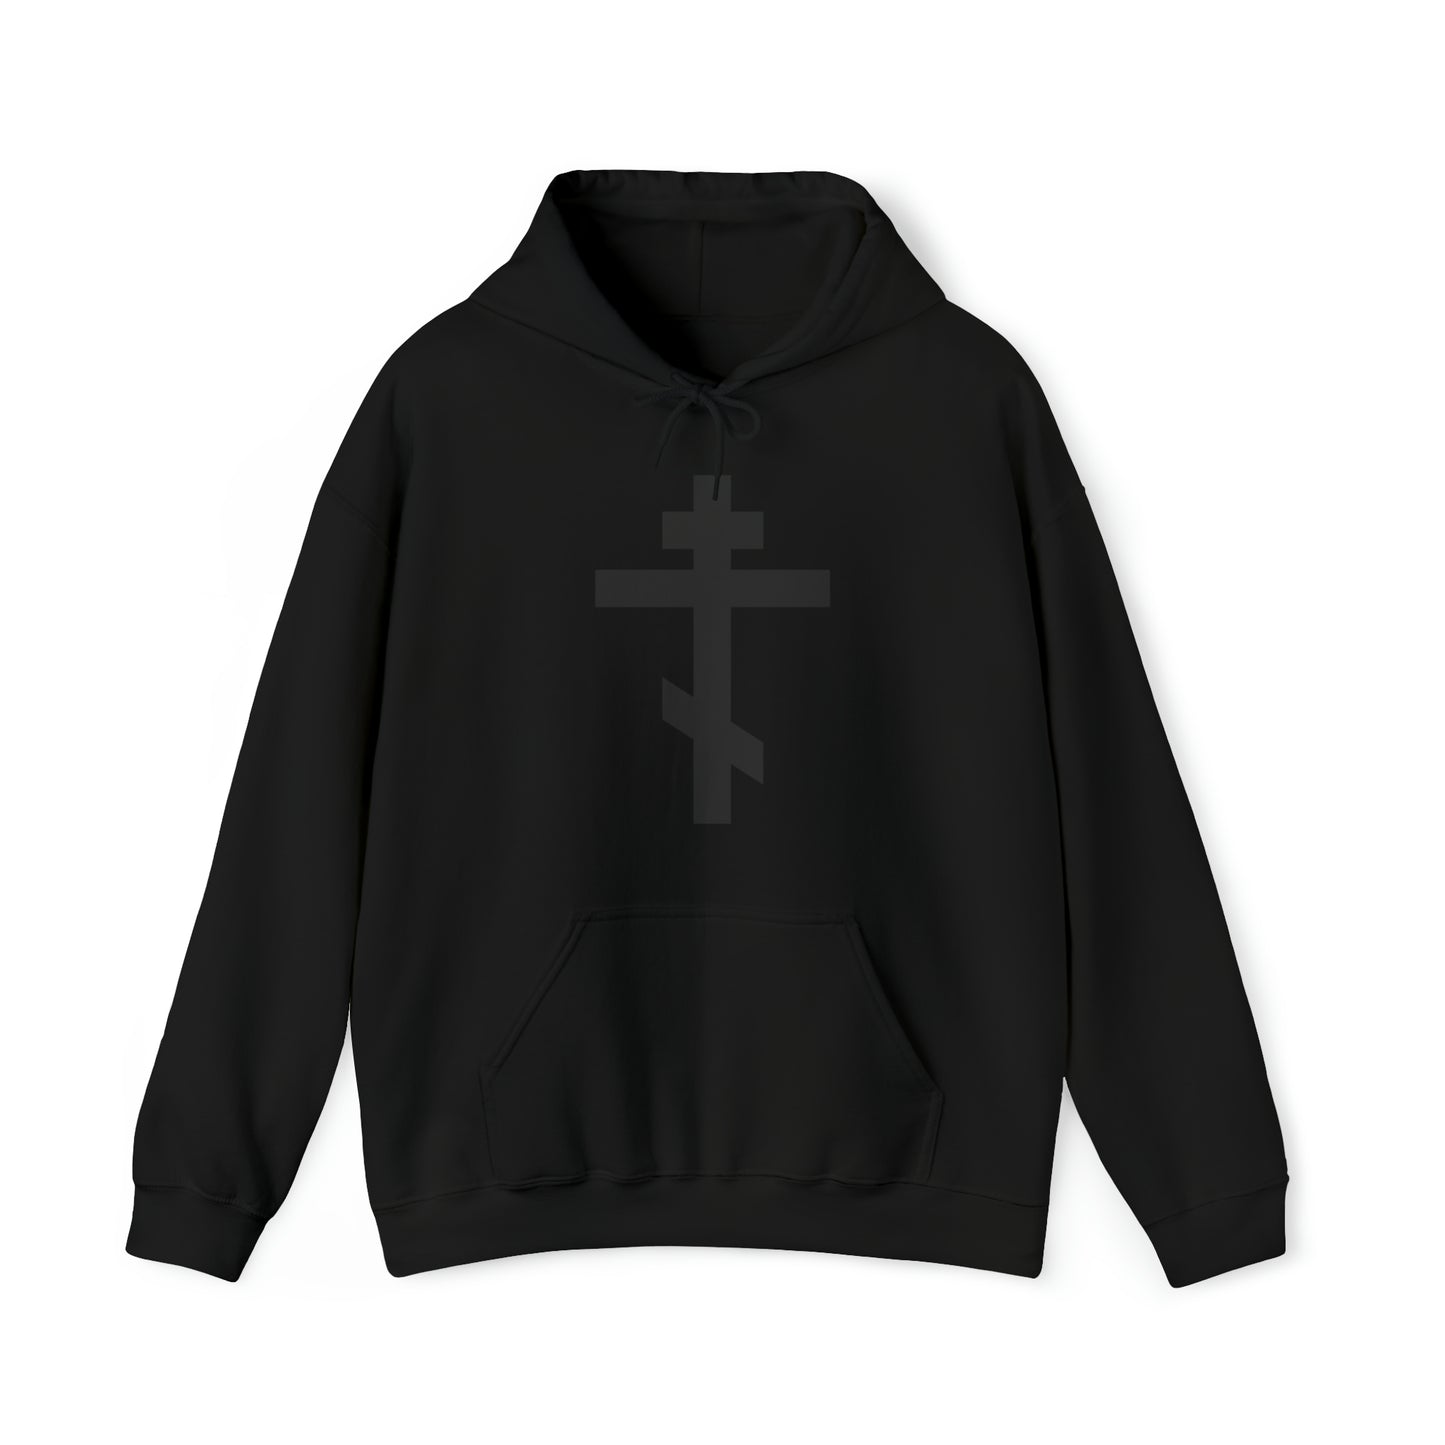 Simple Orthodox Cross (Dark Gray) No. 1 | Orthodox Christian Hoodie / Hooded Sweatshirt